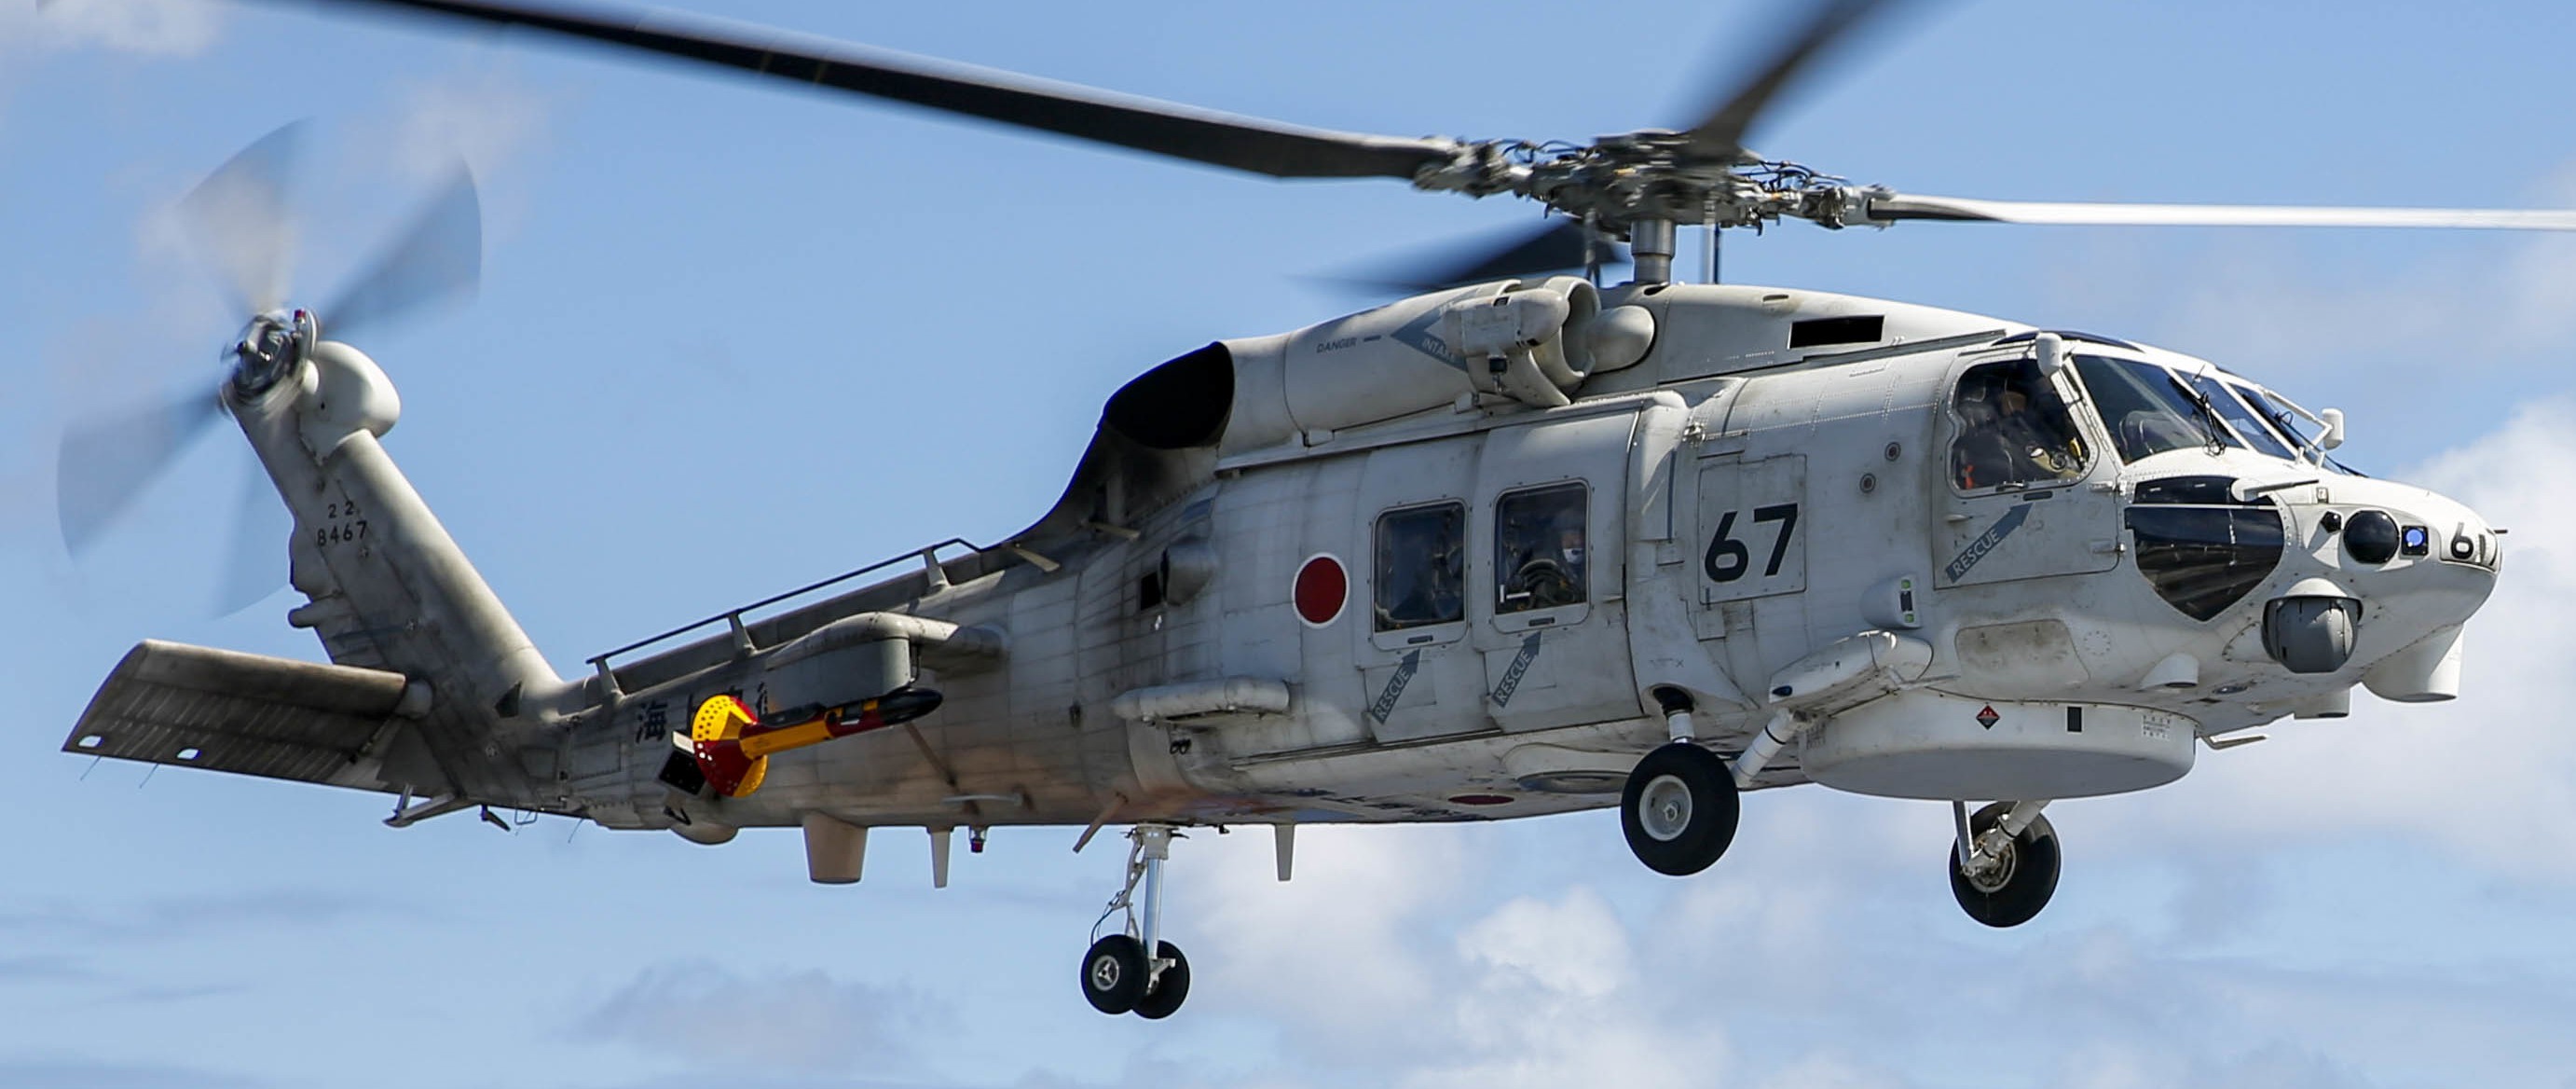 mitsubishi sh-60k helicopter anti submarine japan maritime self defense force jmsdf navy seahawk 8467 03